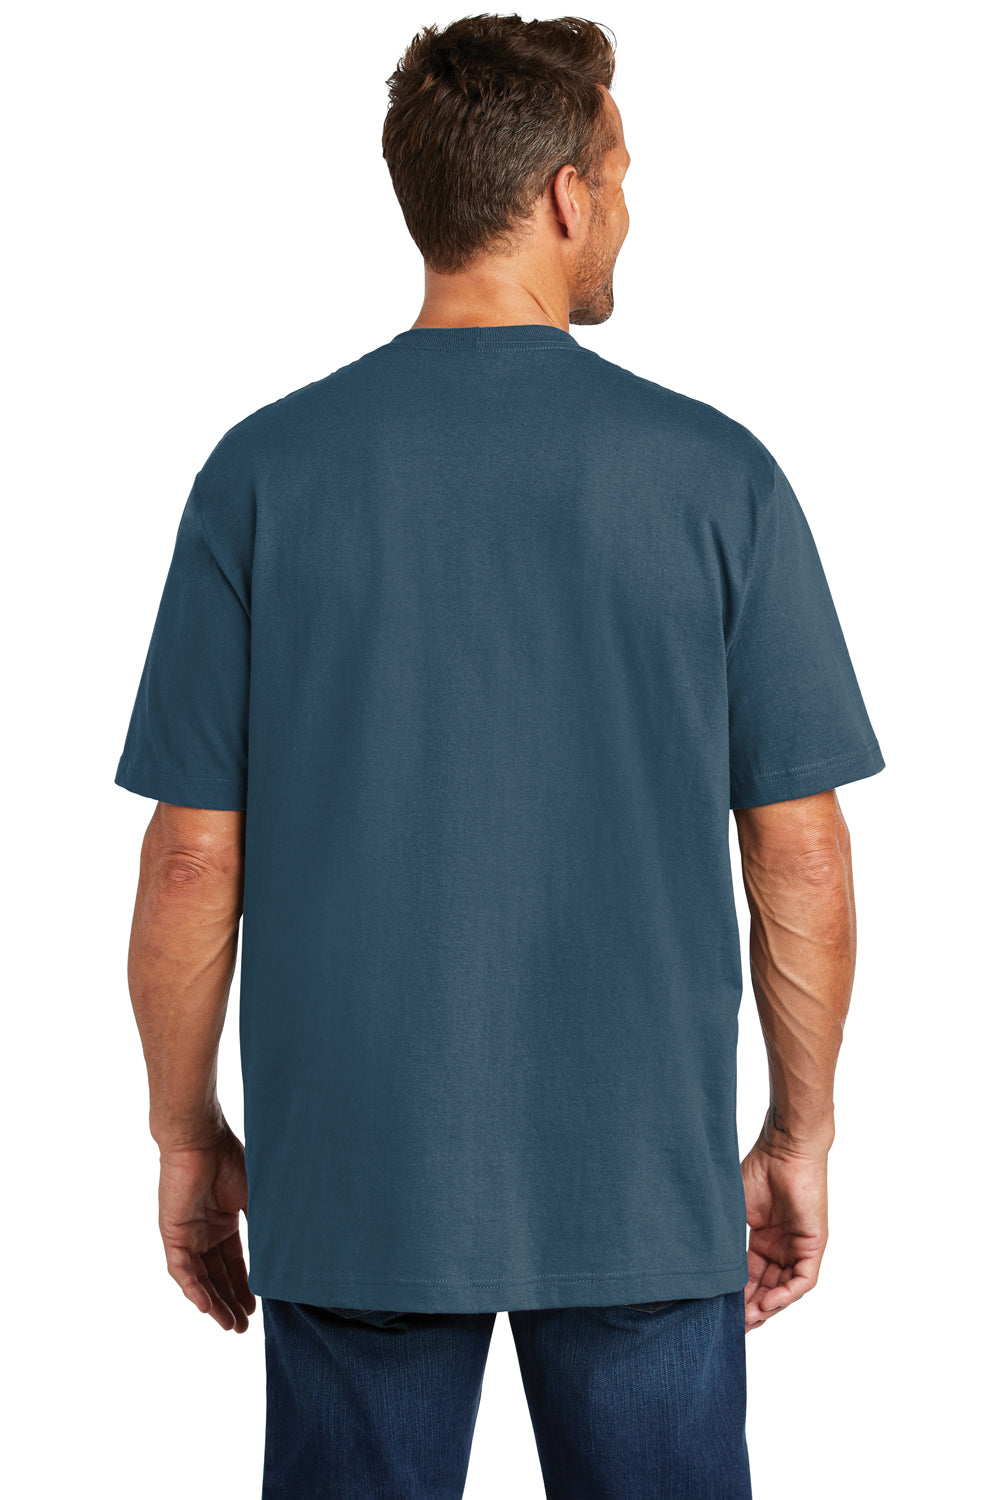 Carhartt CTK87 Mens Workwear Short Sleeve Crewneck T-Shirt w/ Pocket Stream Blue Back